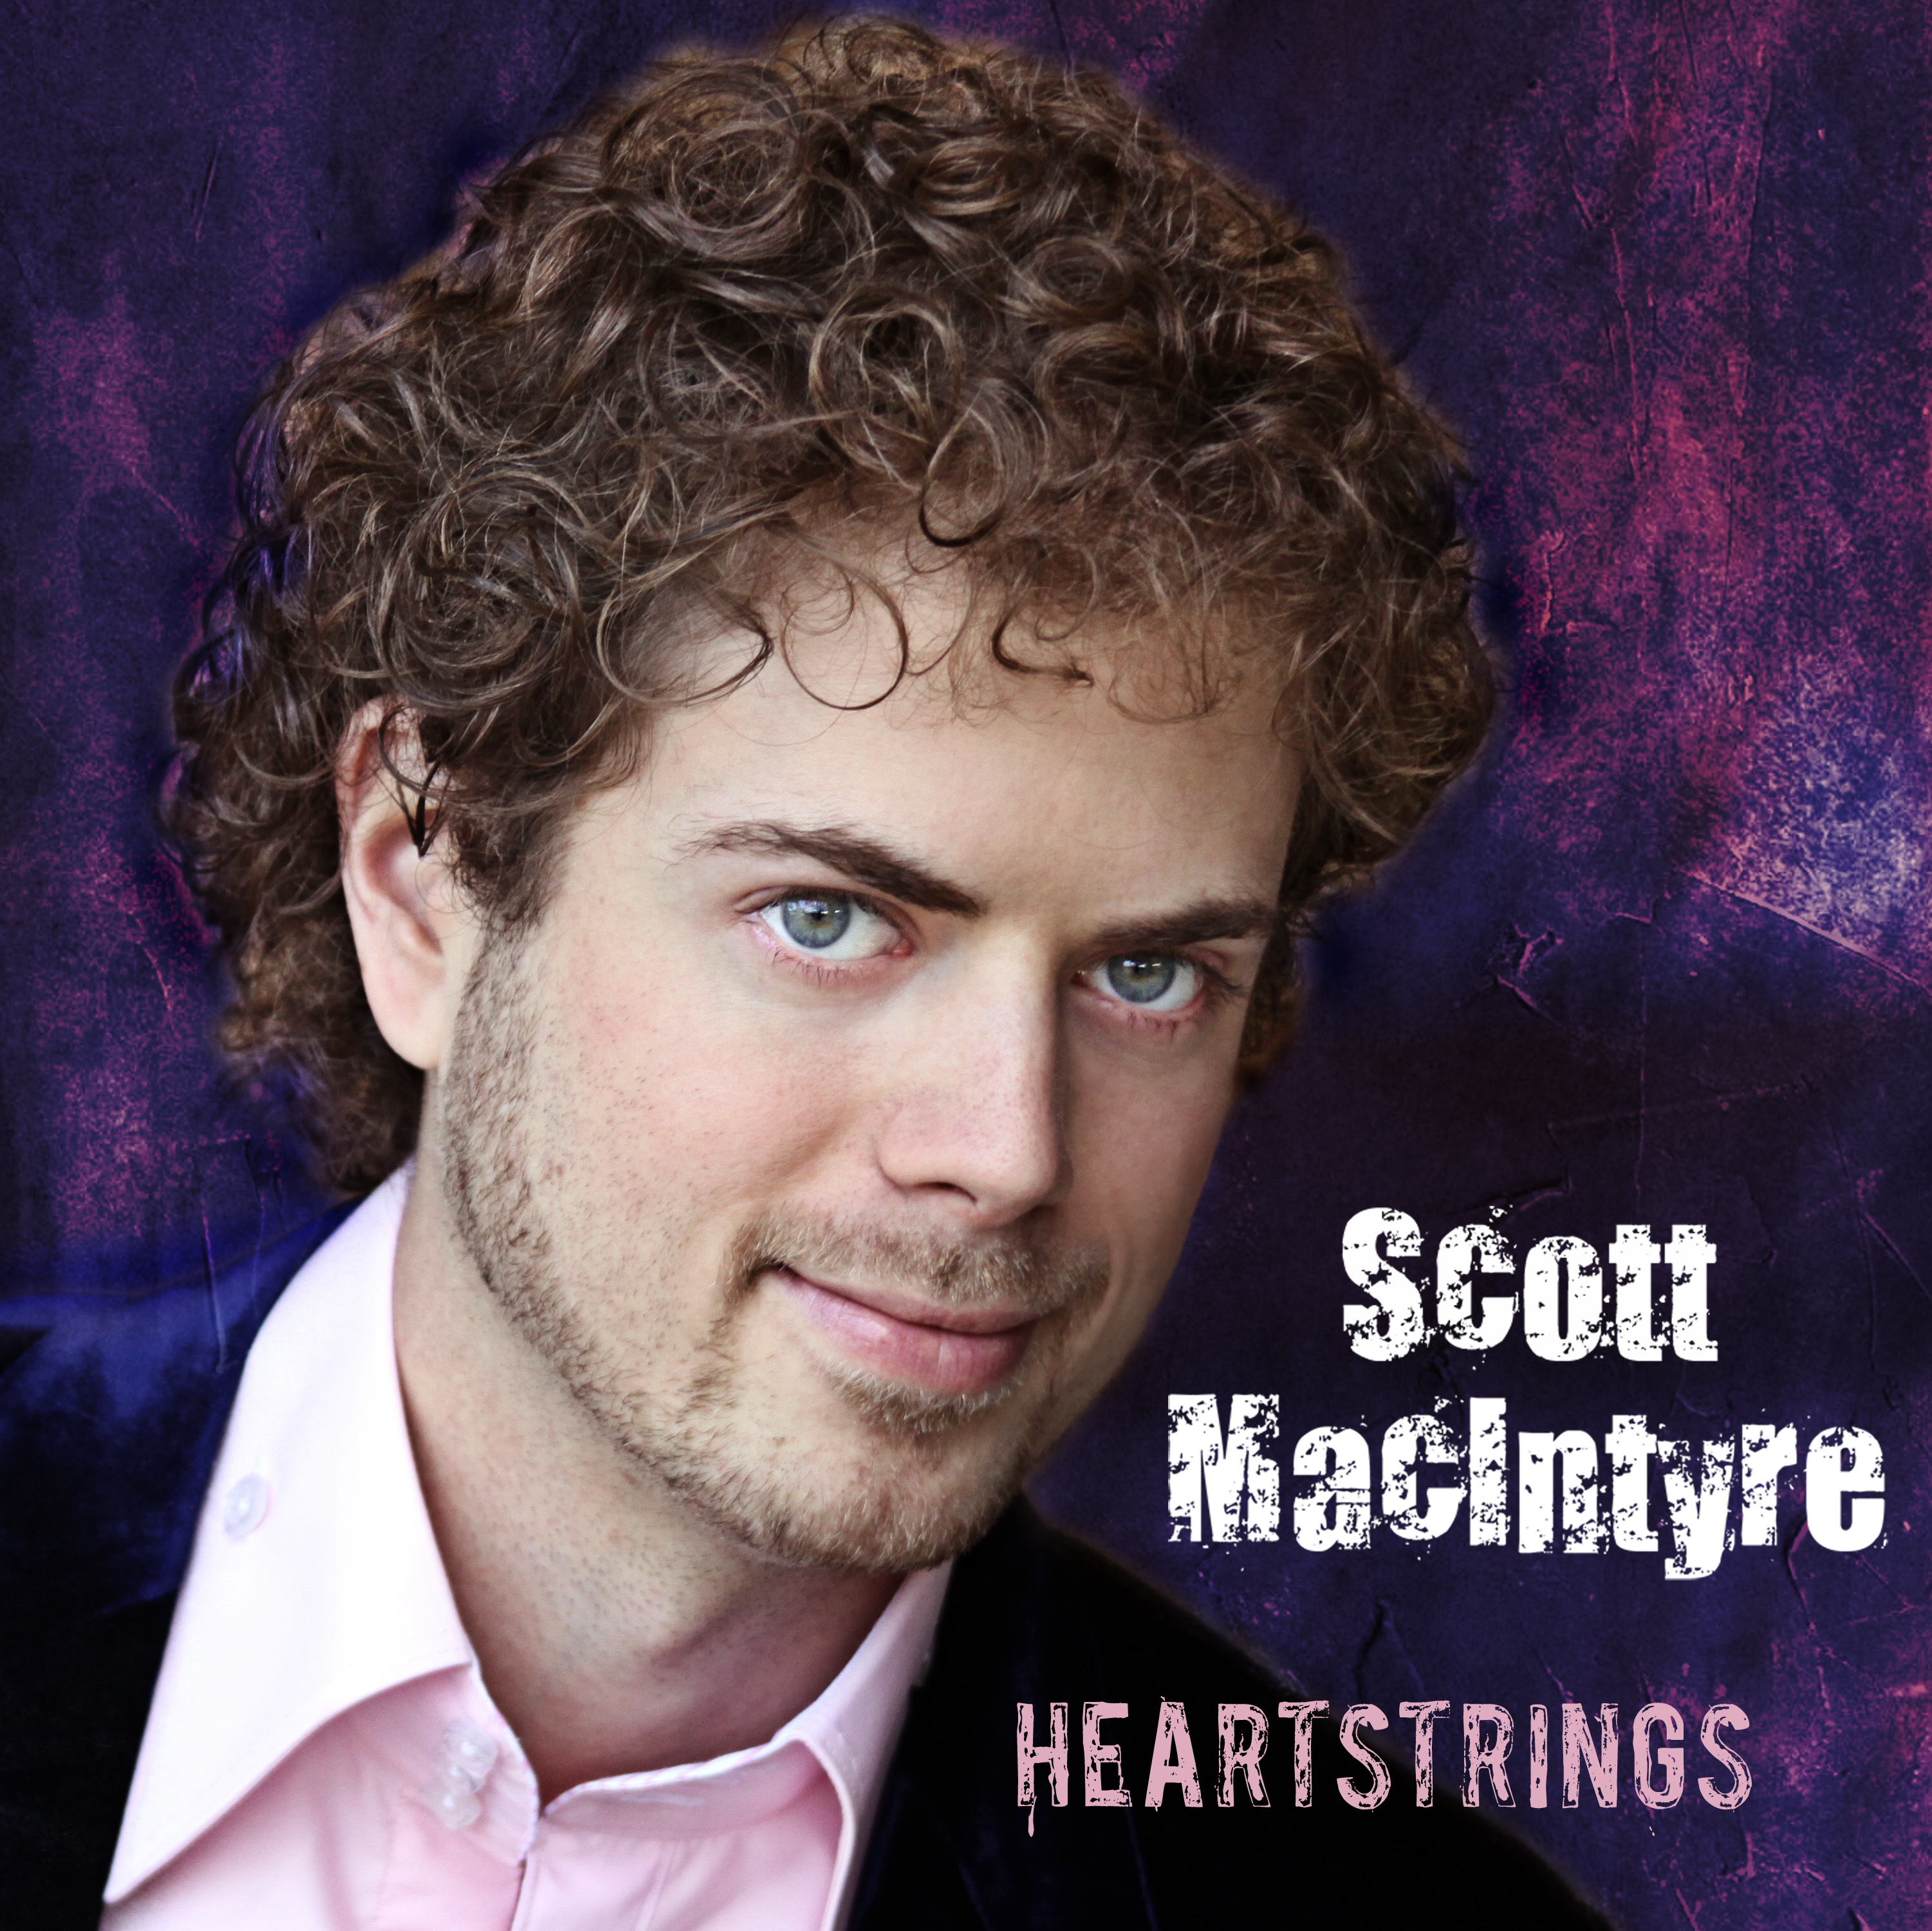 “Heartstrings” on iTunes